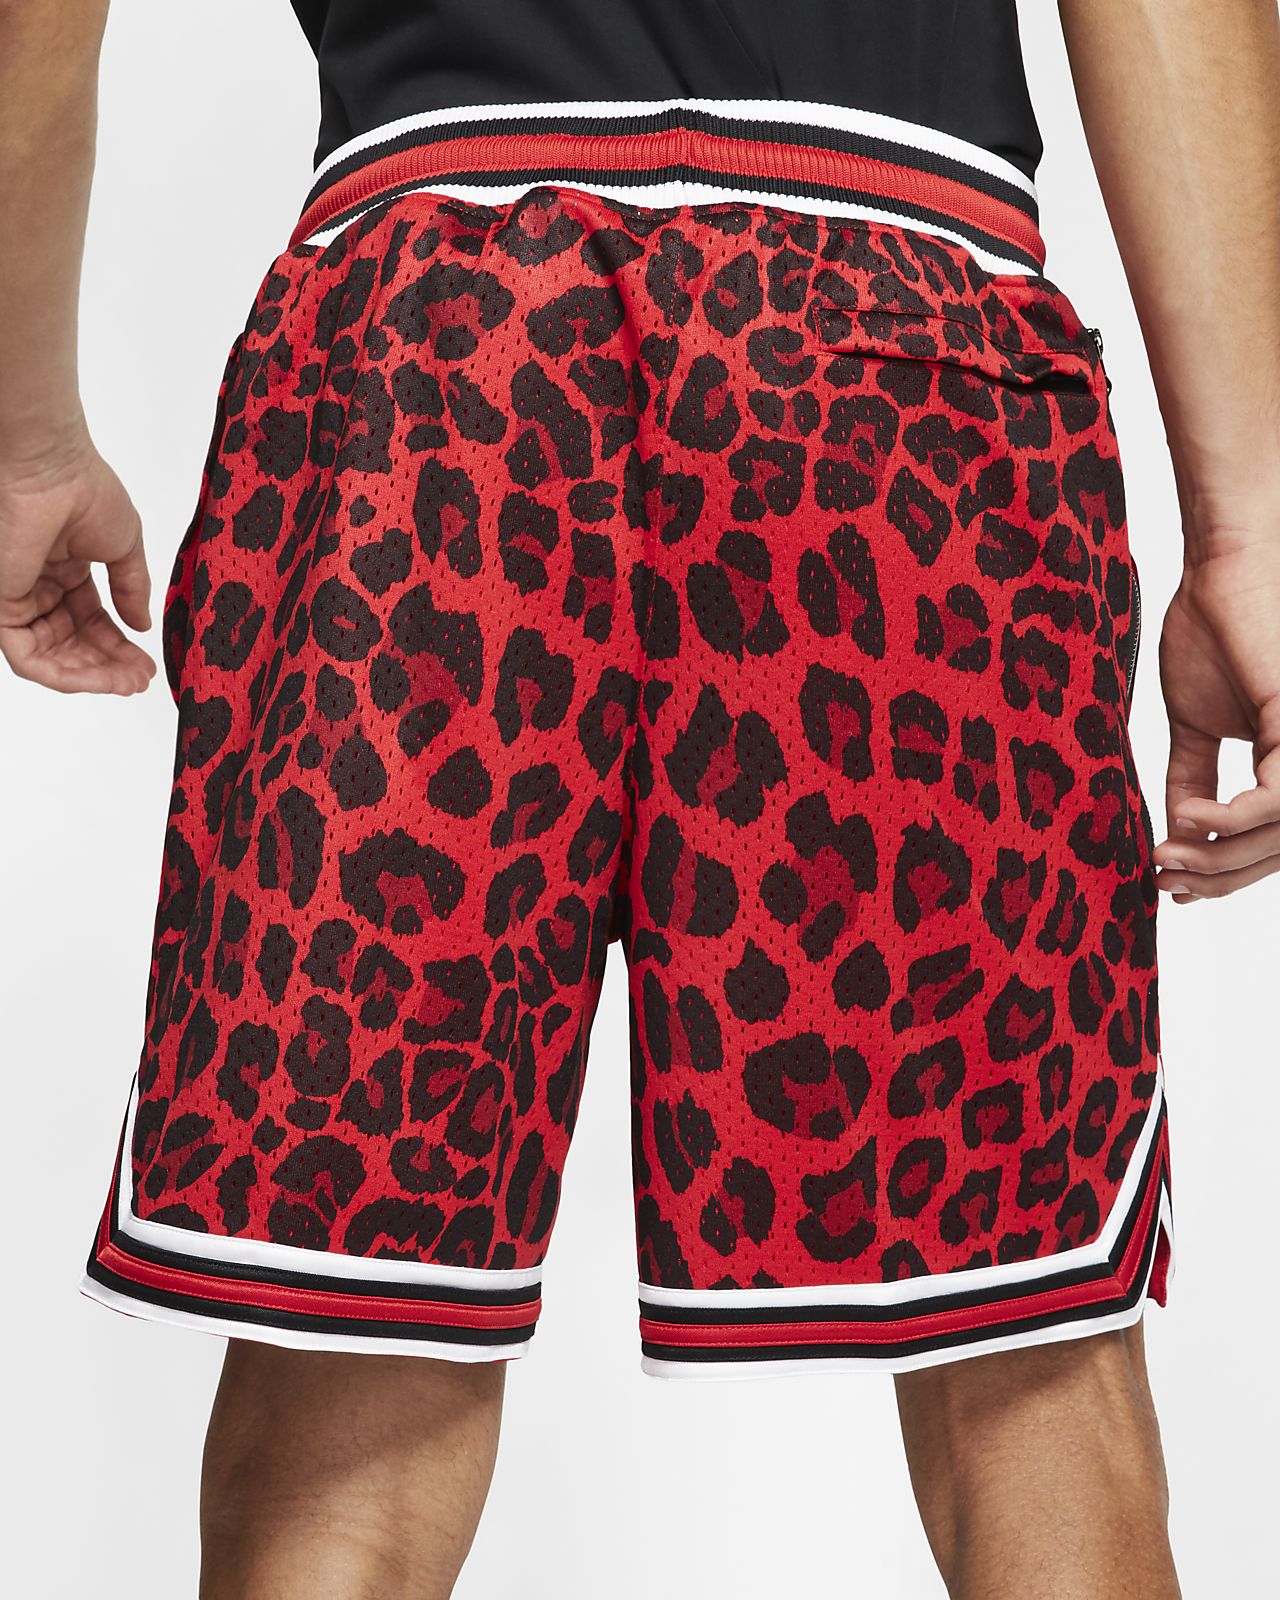 nike leopard print shorts, Off 79% ,